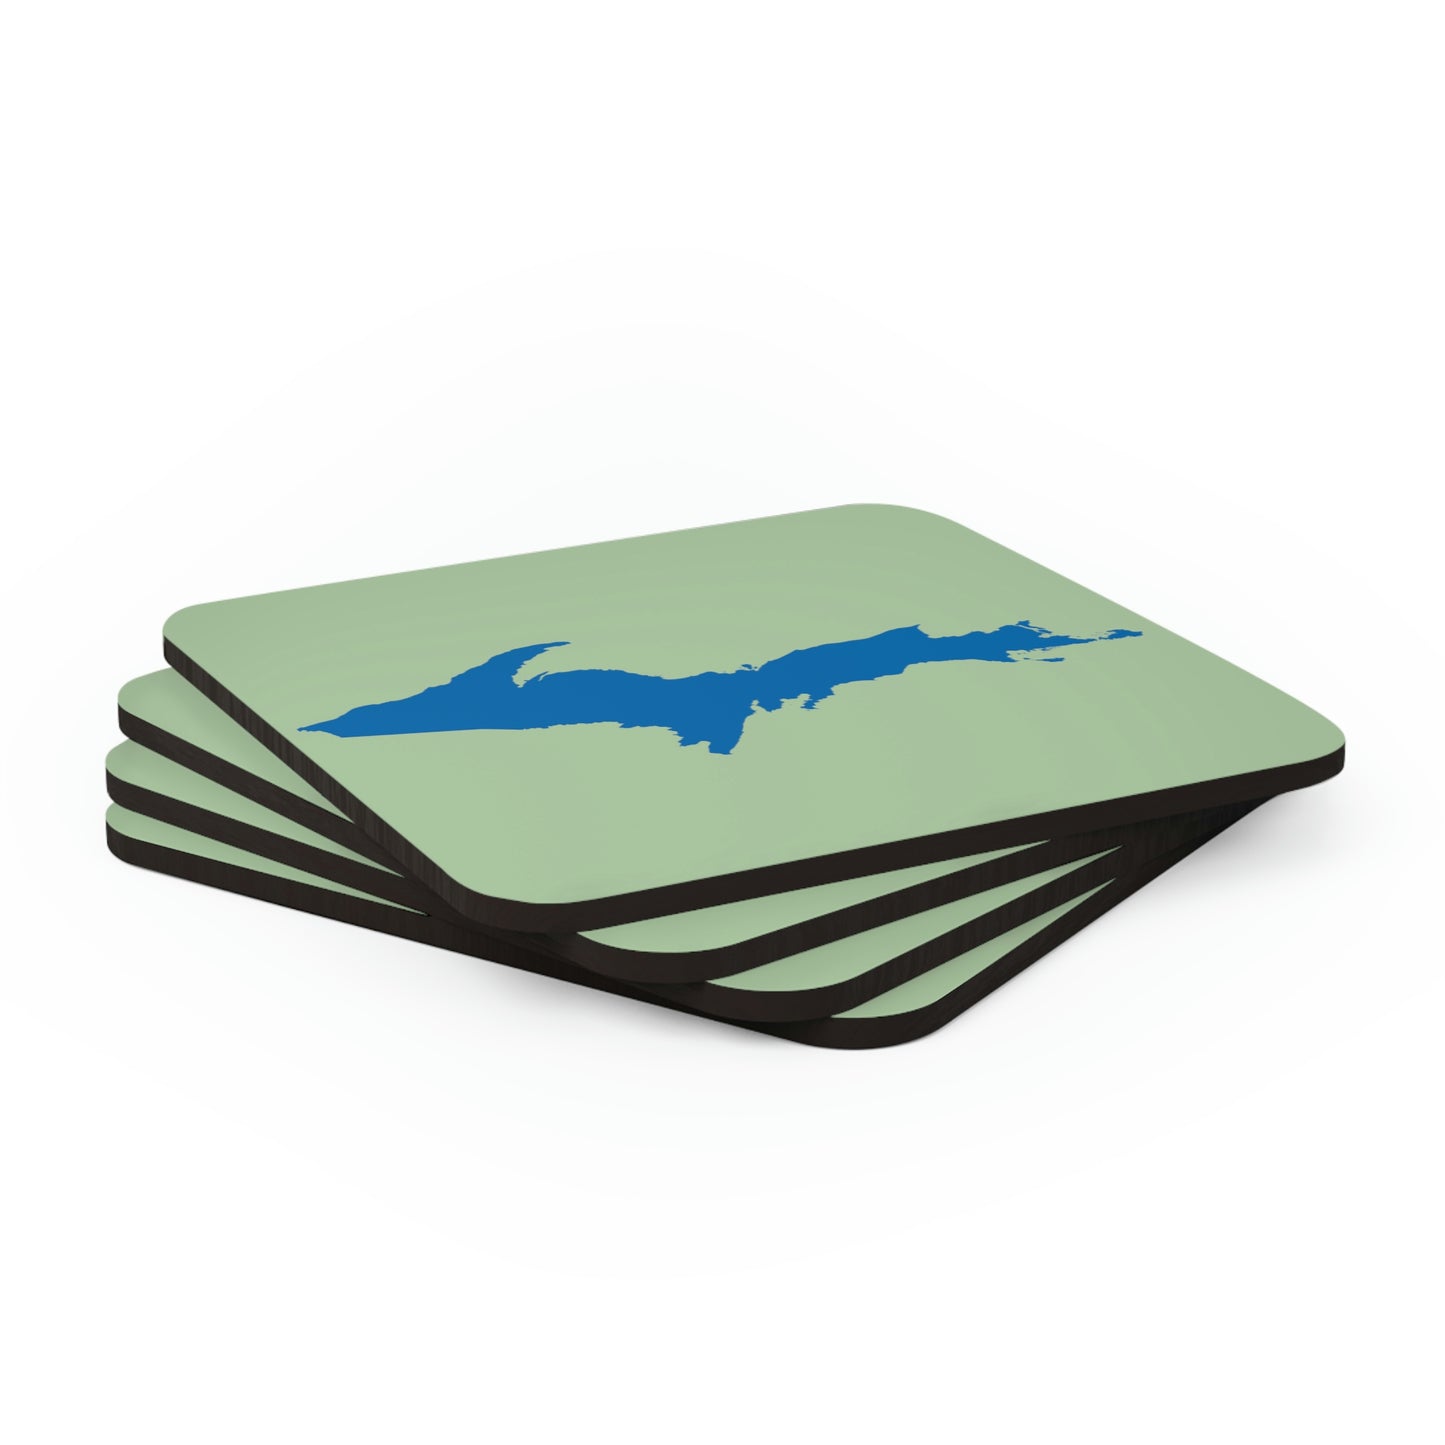 Michigan Upper Peninsula Coaster Set (Green Tea Color w/ Azure UP Outline) | Corkwood - 4 pack